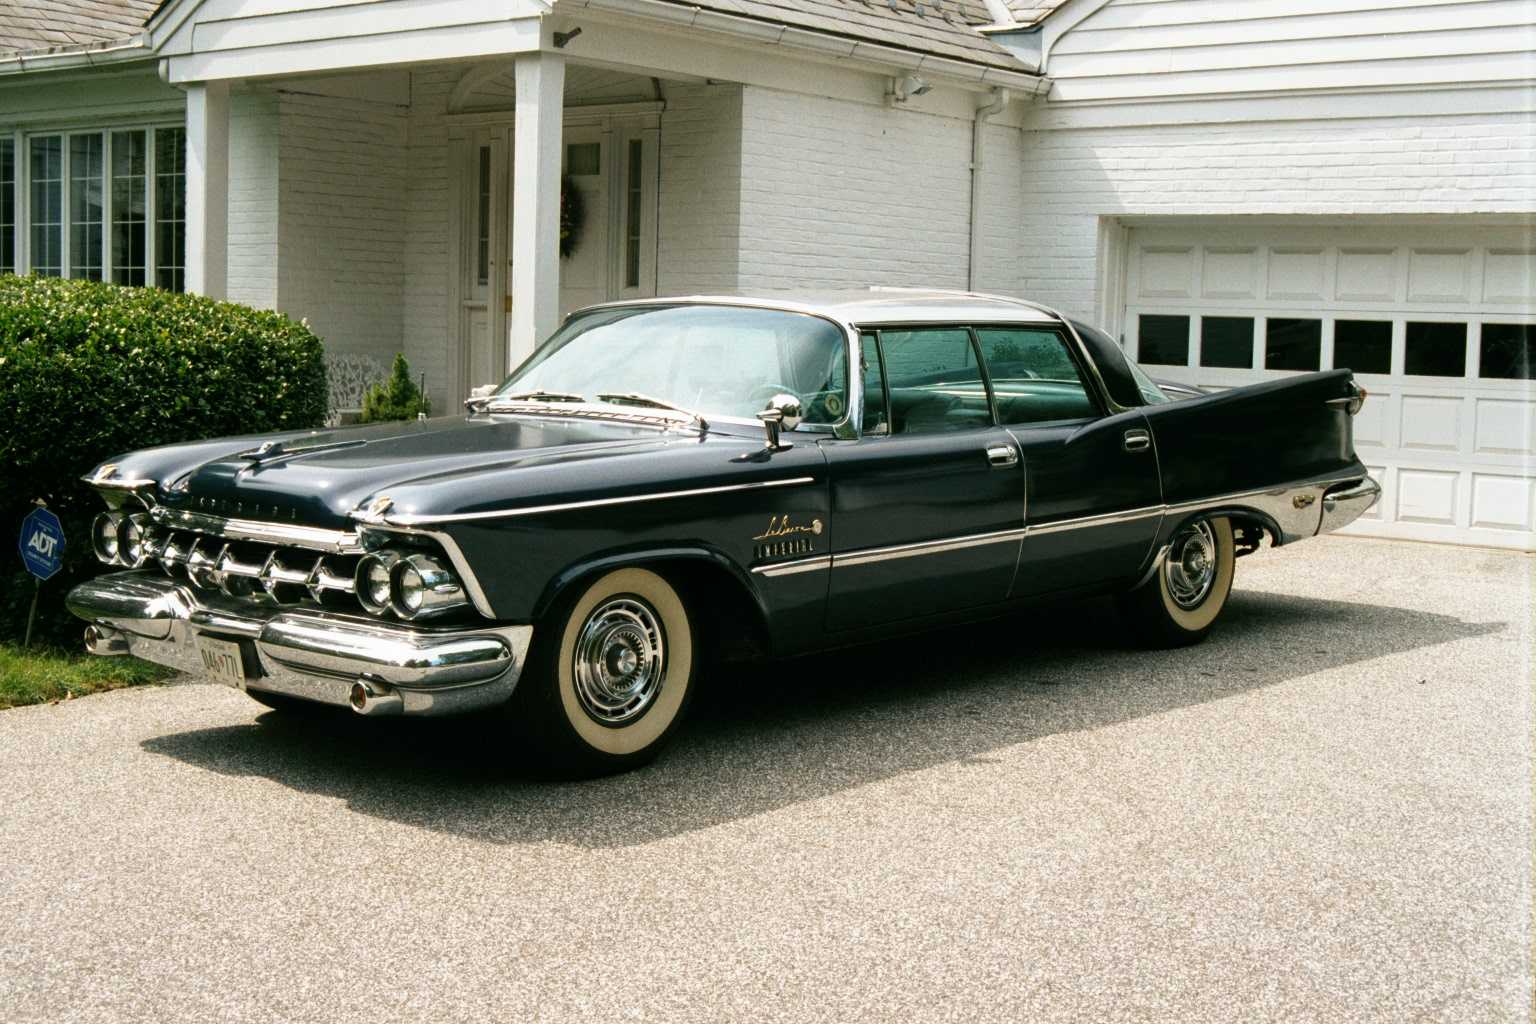 Chrysler Crown Imperial 1959 #4